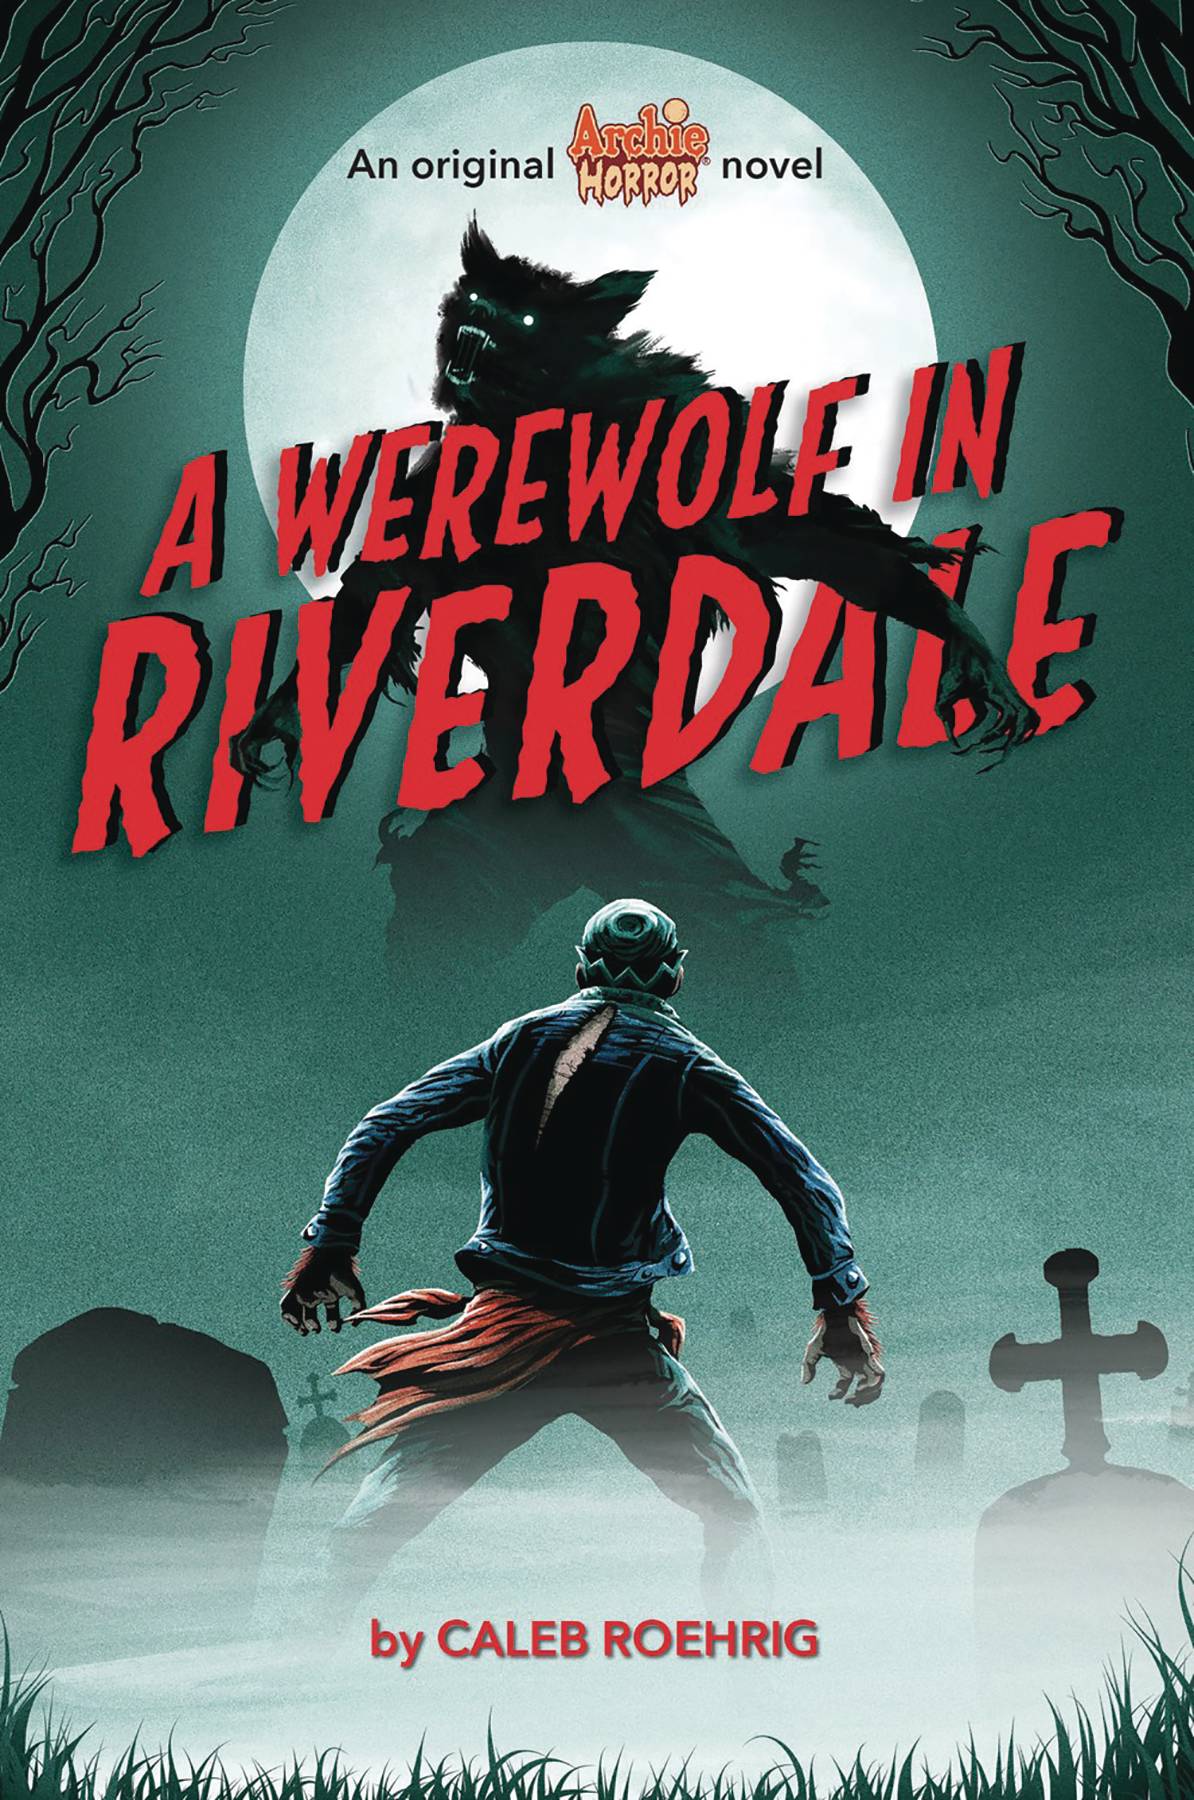 Archie Horror Novel Soft Cover Volume 1 Werewolf In Riverdale